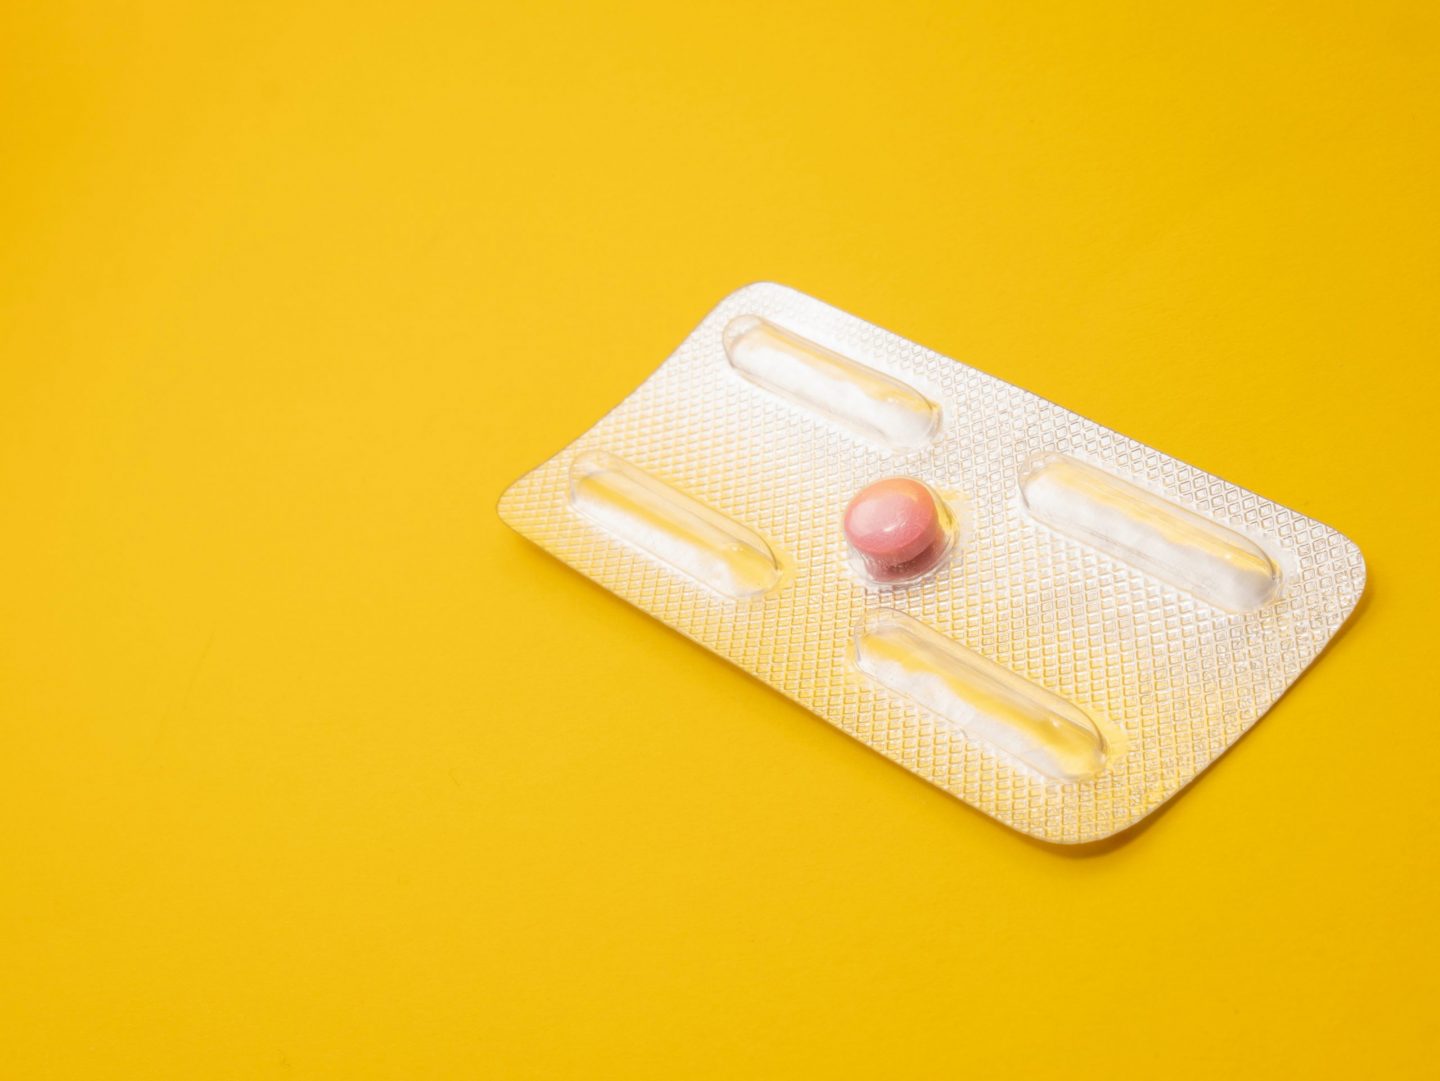 Plan B Emergency Contraceptive Pill